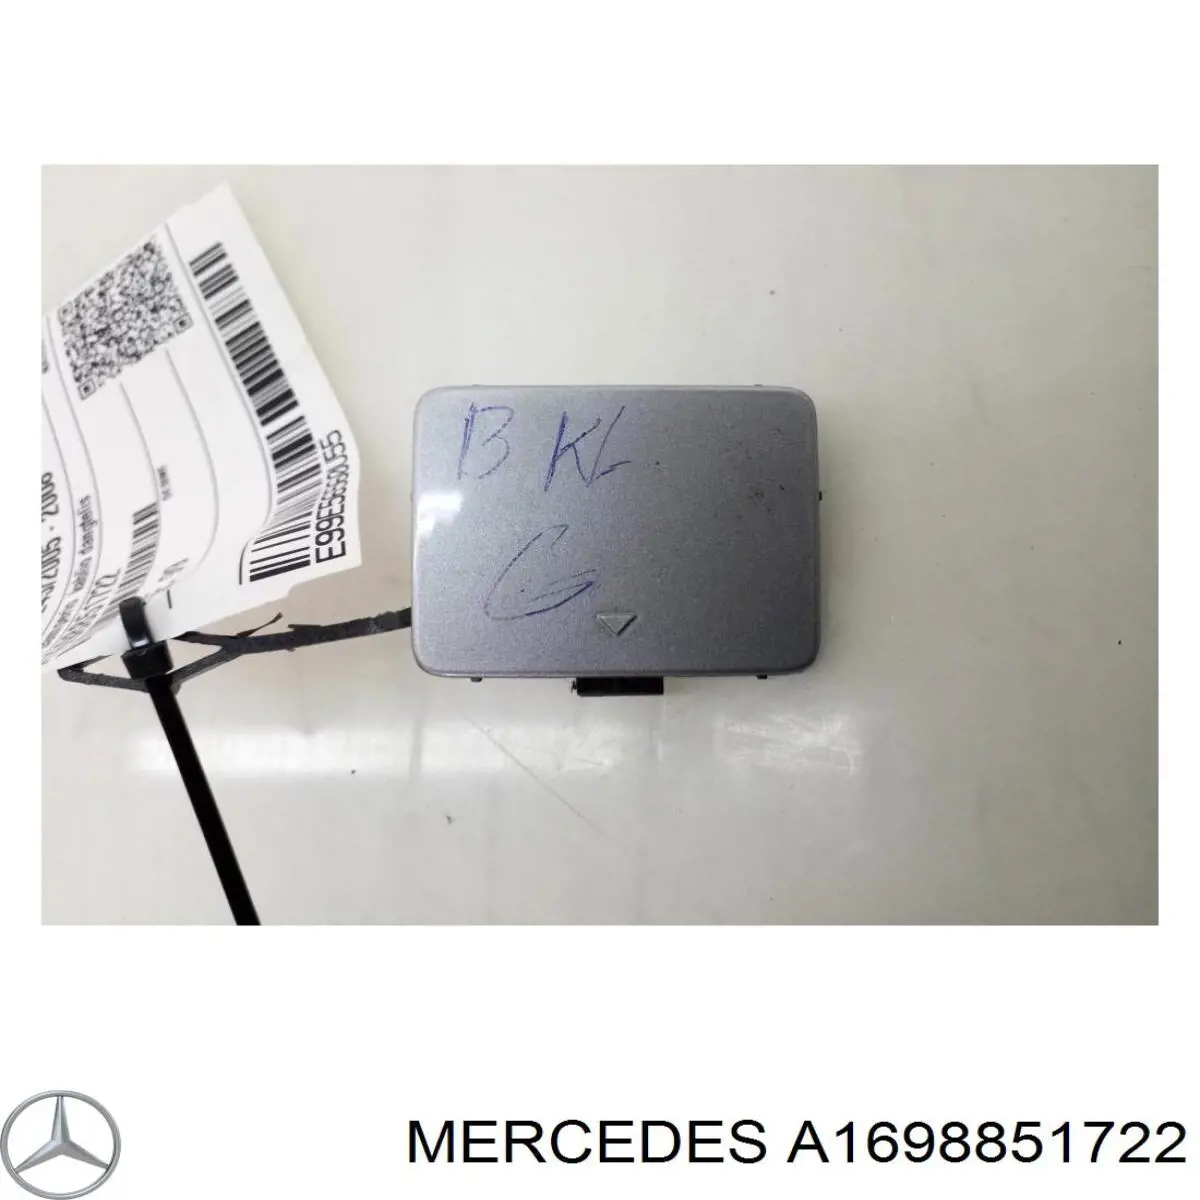 A16988517229999 Mercedes